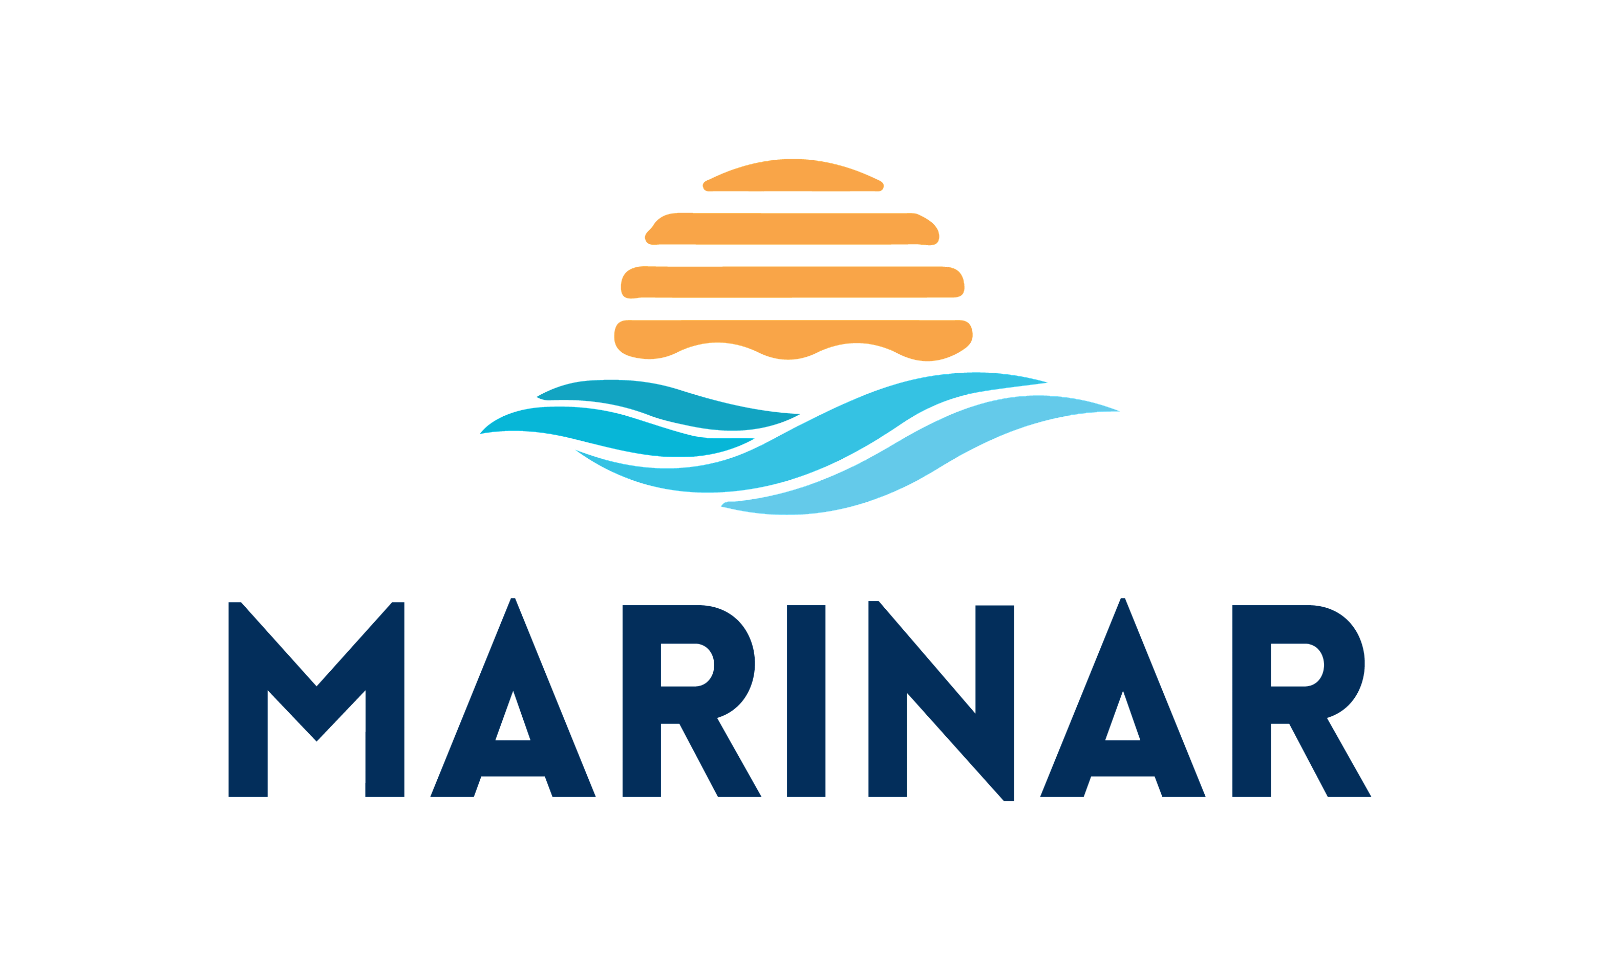 Marinar.com - Creative brandable domain for sale